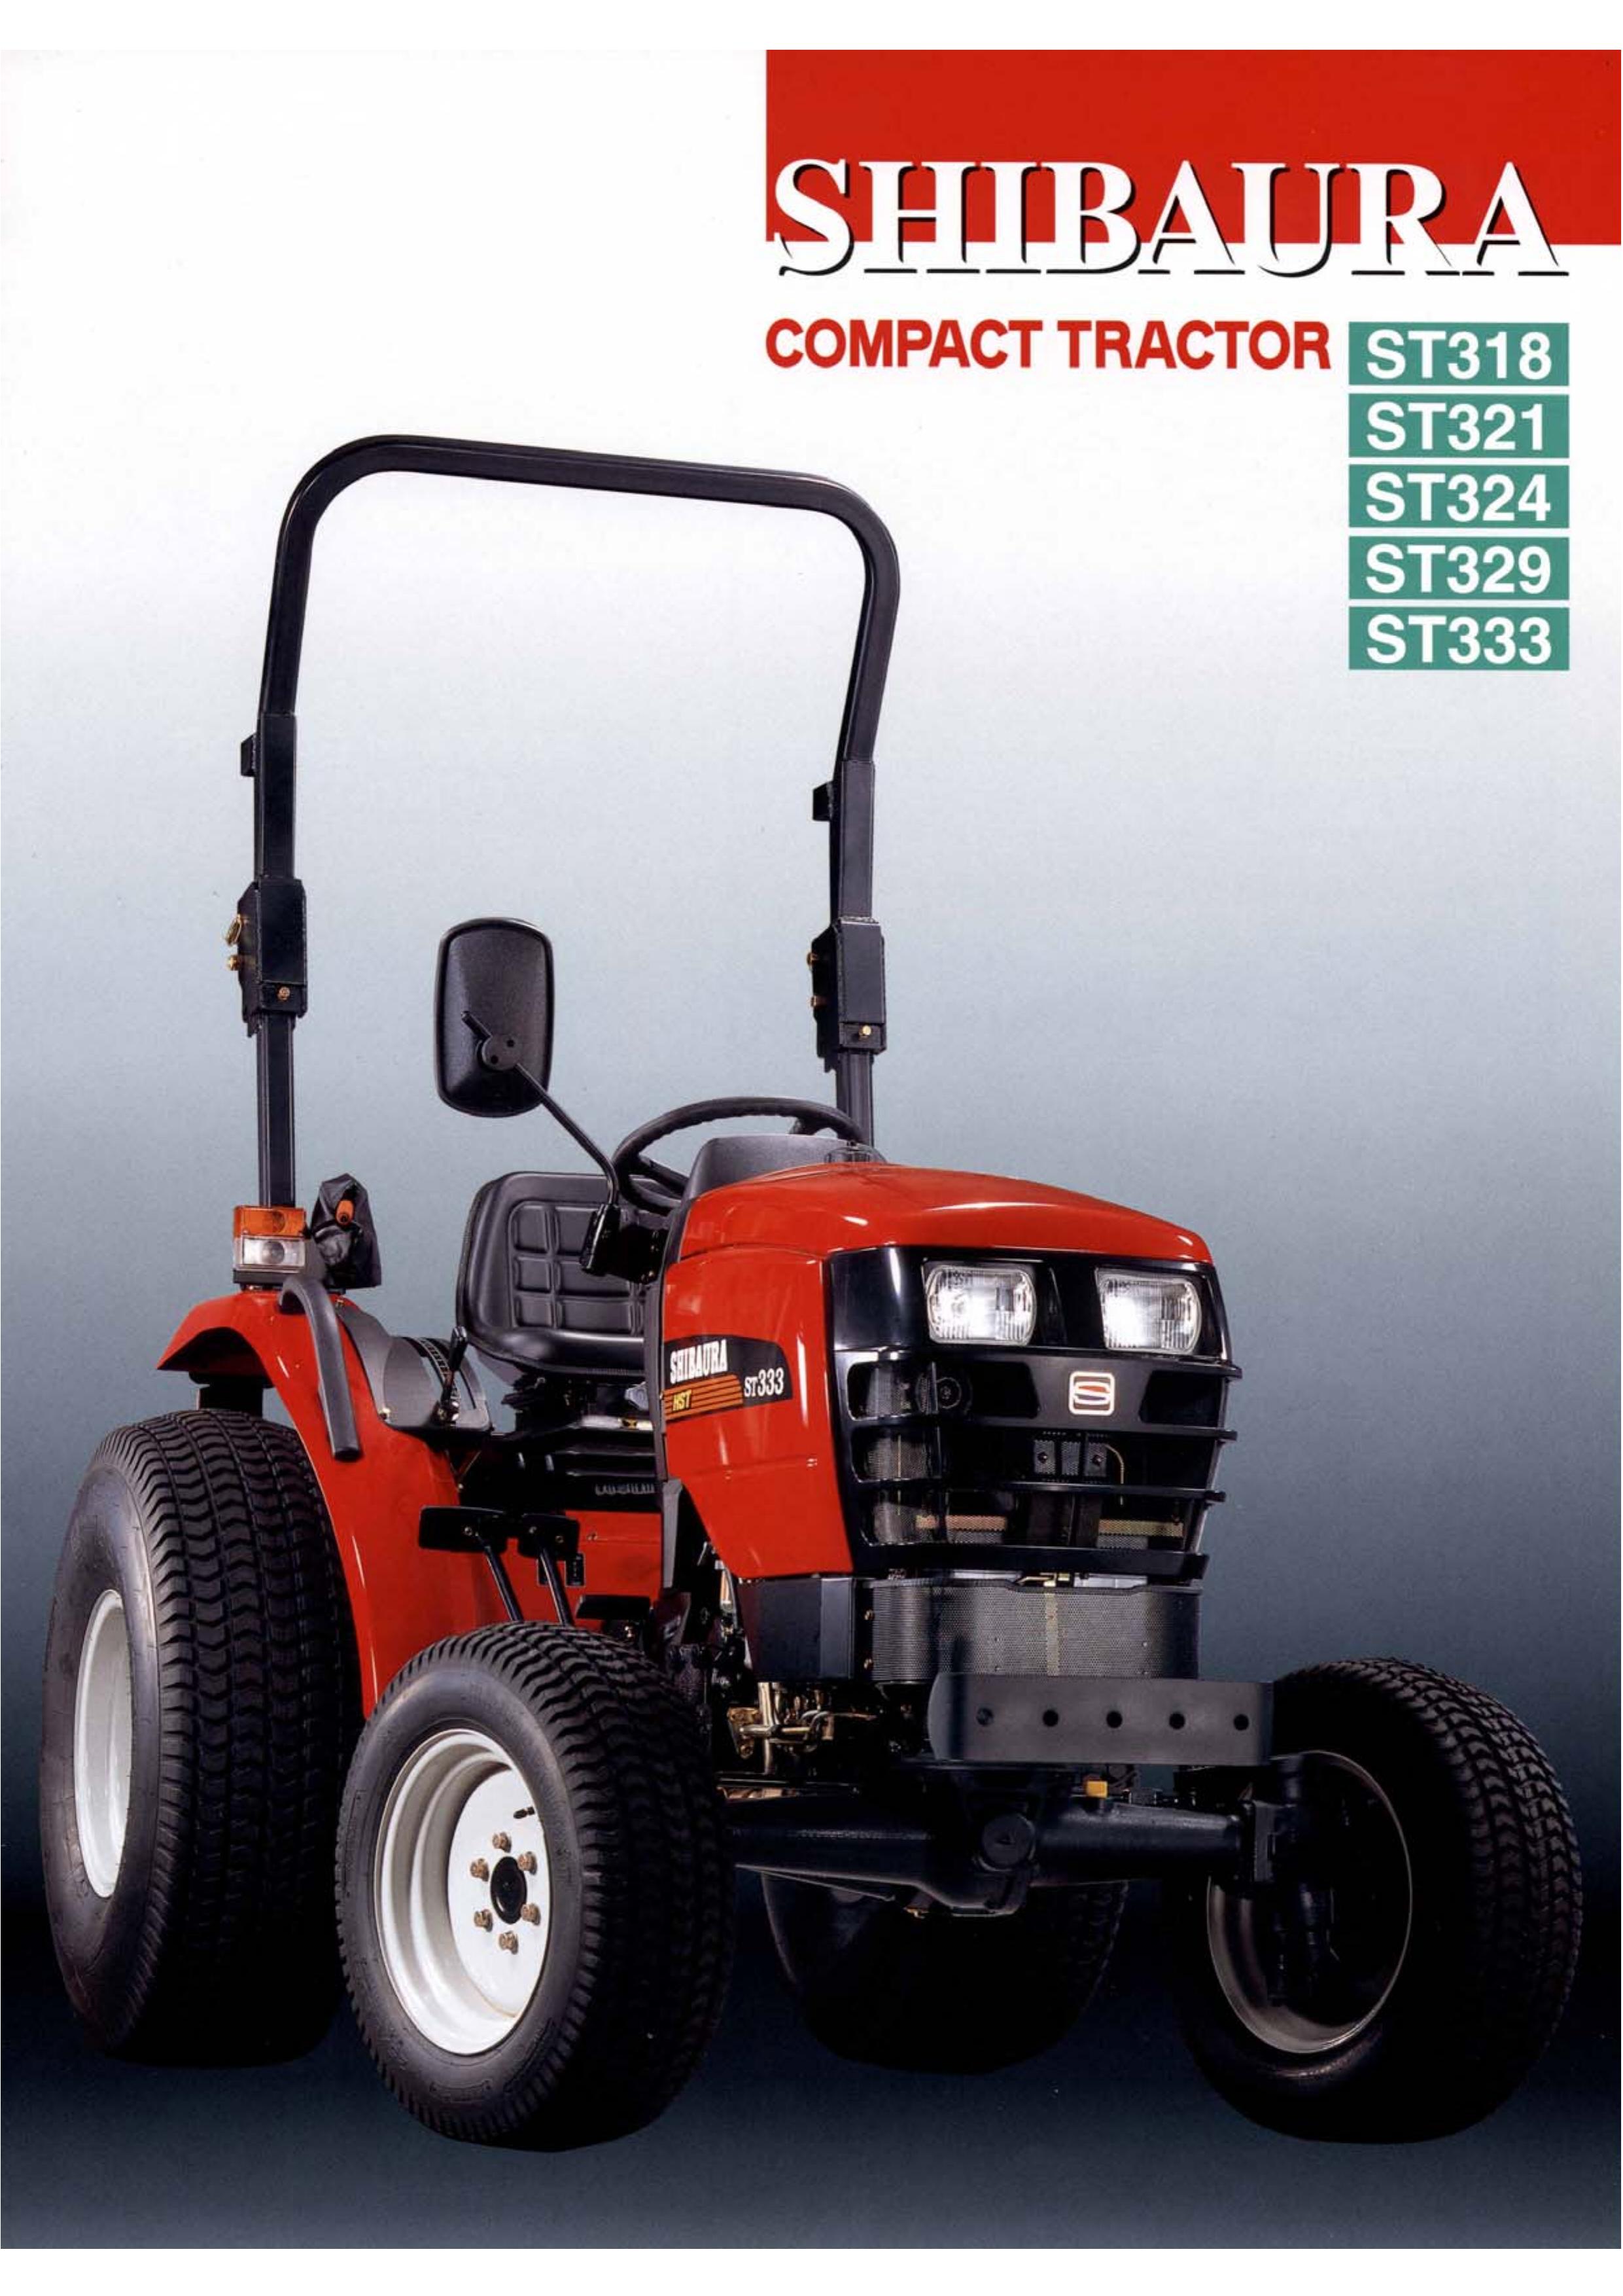 Shibaura ST324 Lawn Mower User Manual